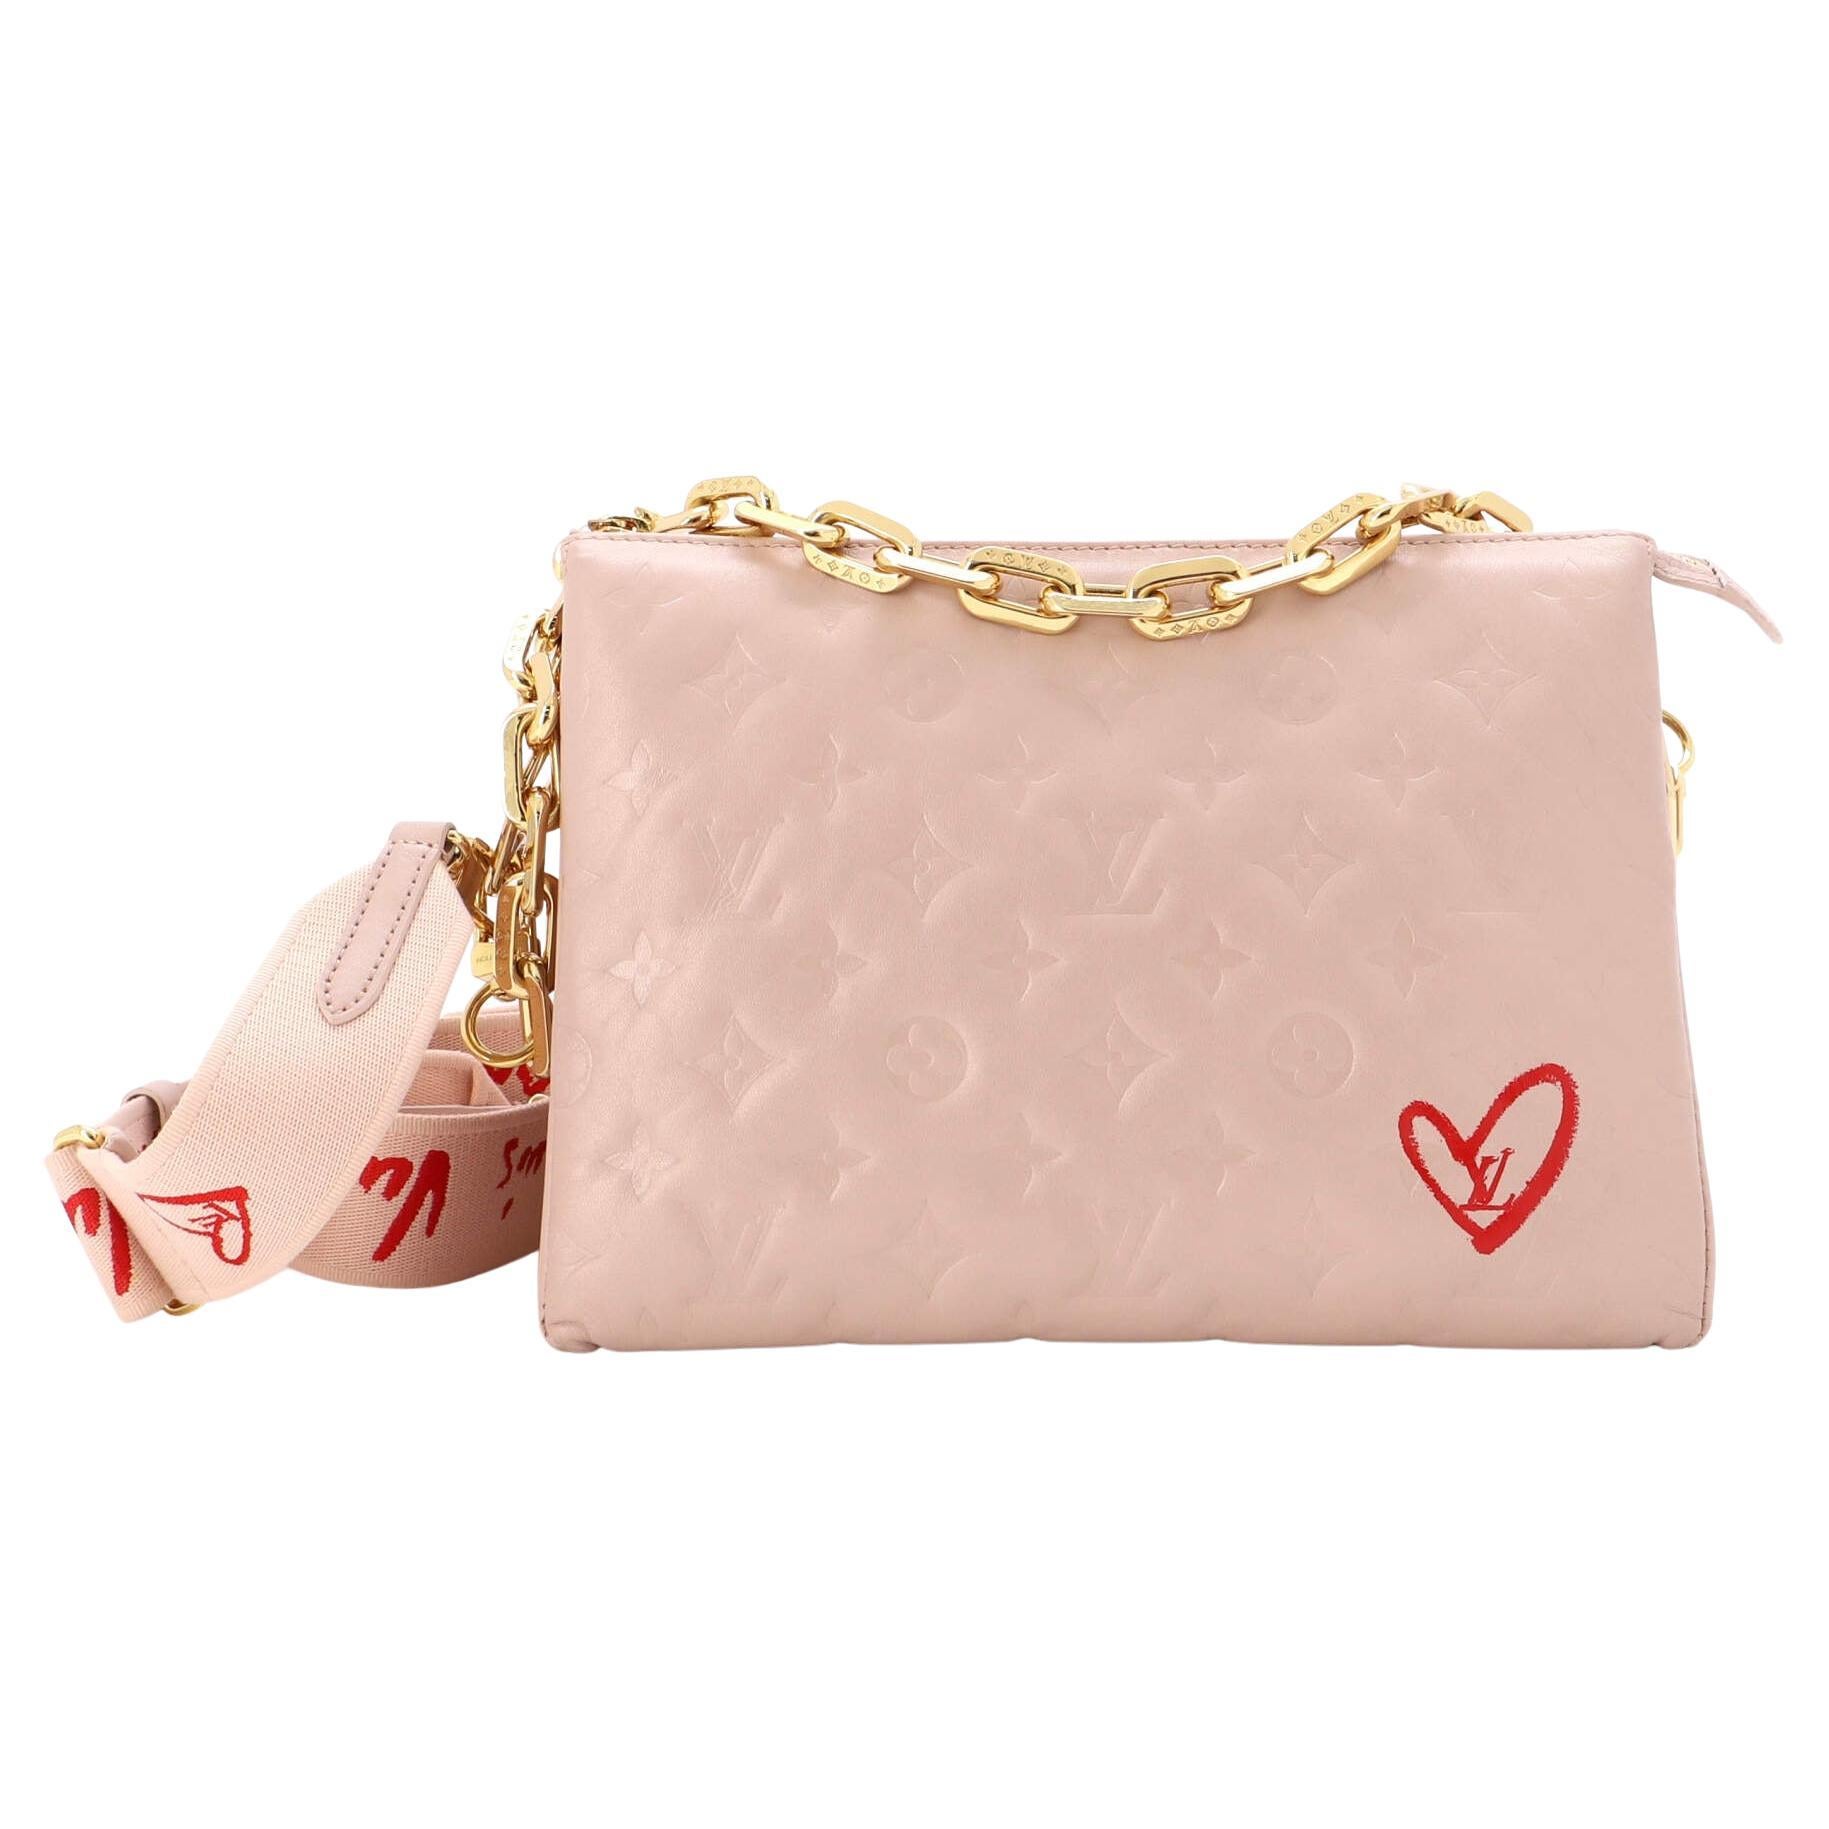 Louis Vuitton Light Pink Lambskin Embossed Fall In Love Heart Bag